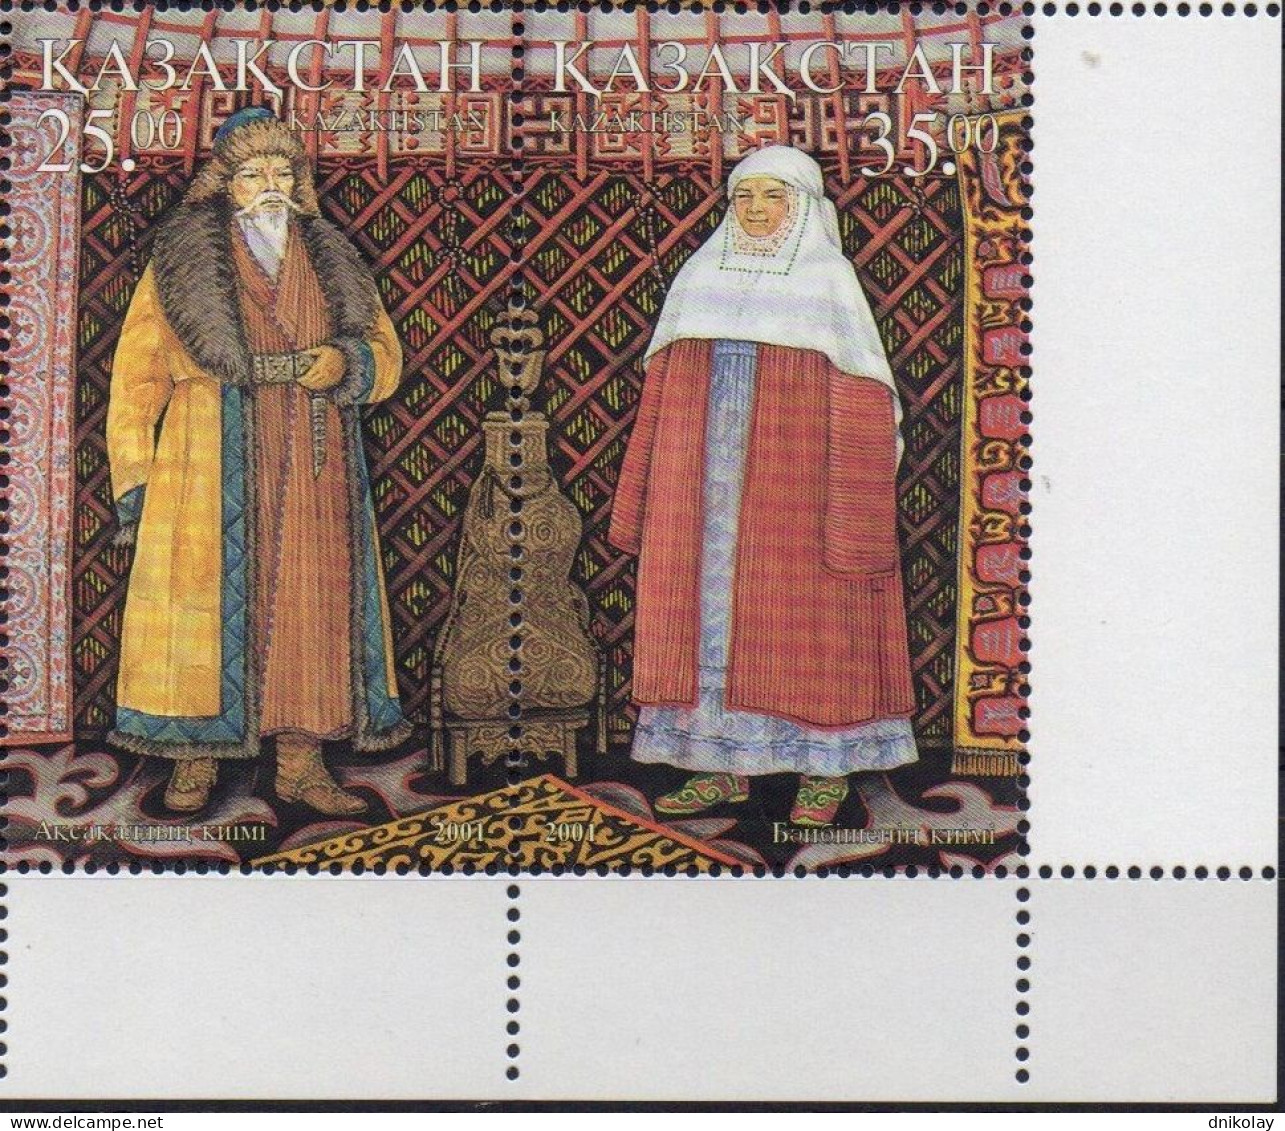 2001 362 Kazakhstan Traditional Costumes MNH - Kazakhstan